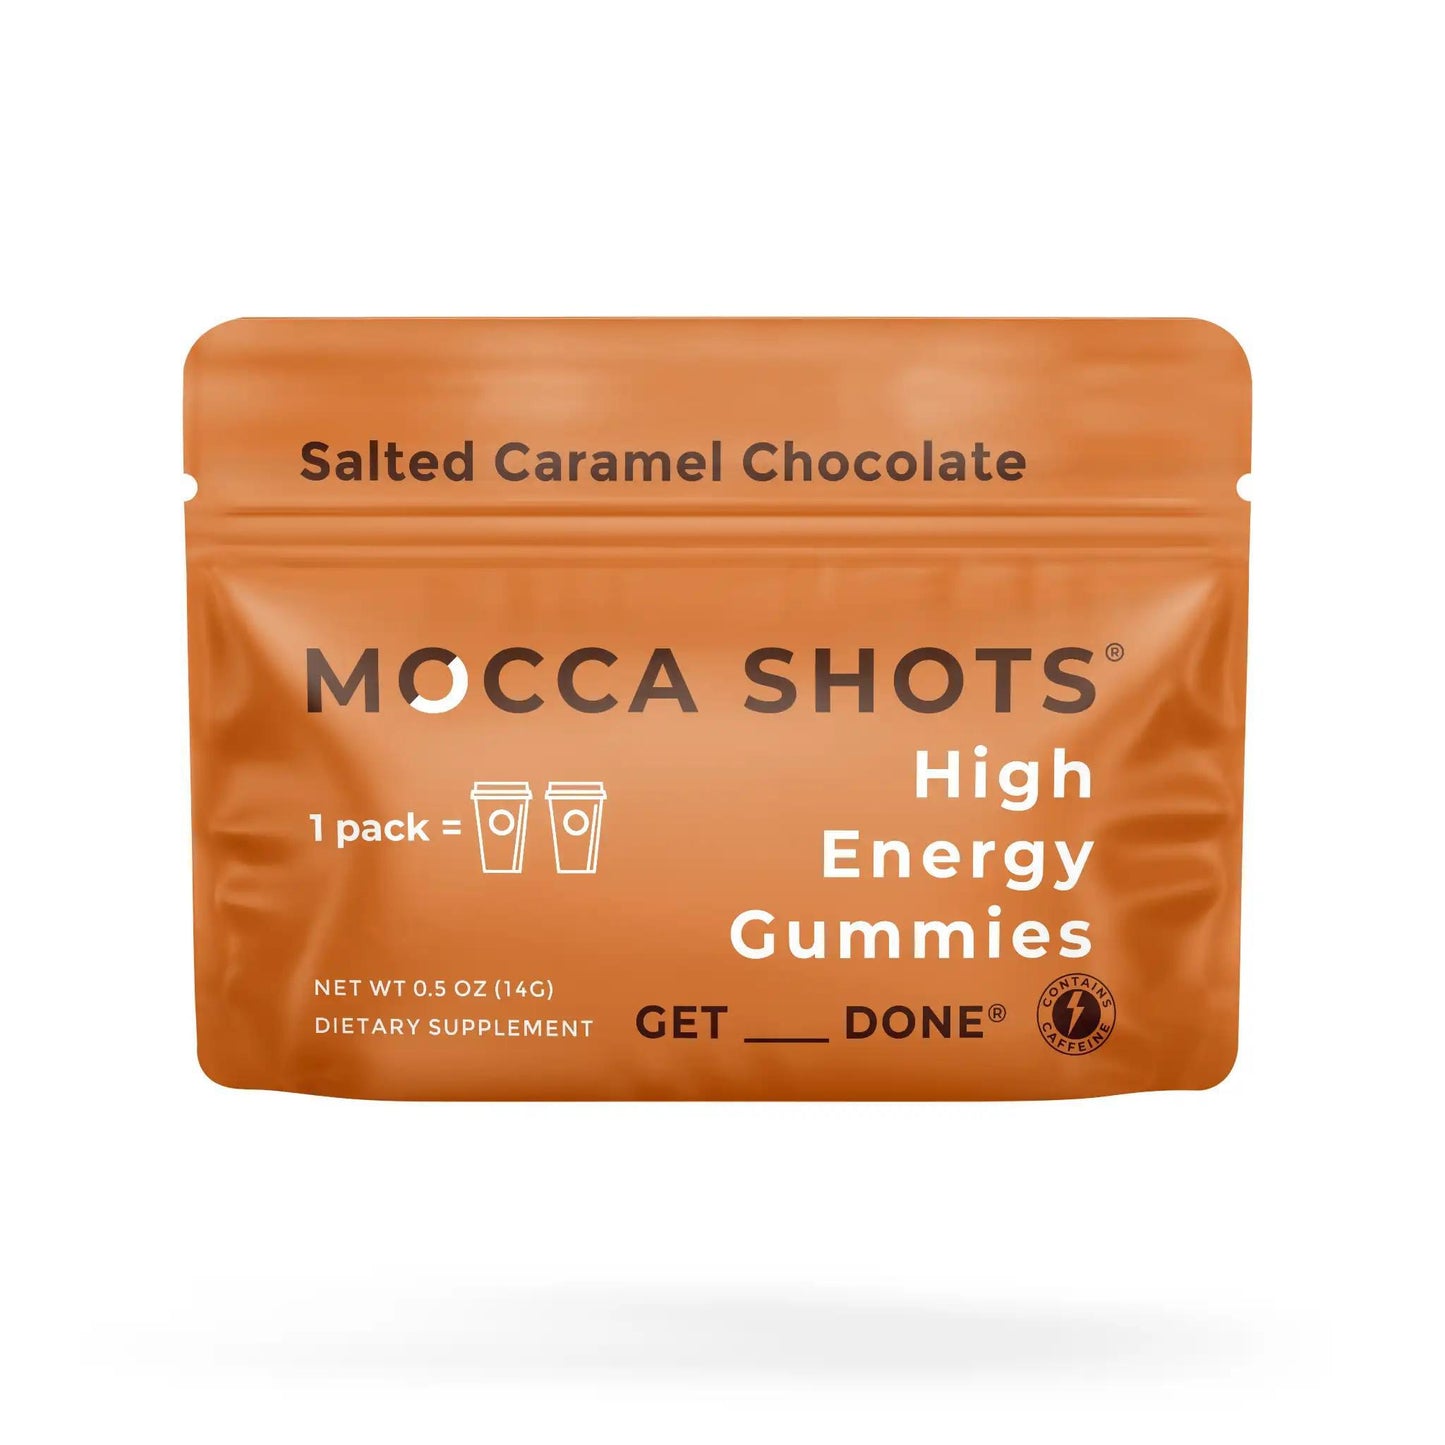 Salted Caramel Chocolate Mocca Shots High Energy Gummies